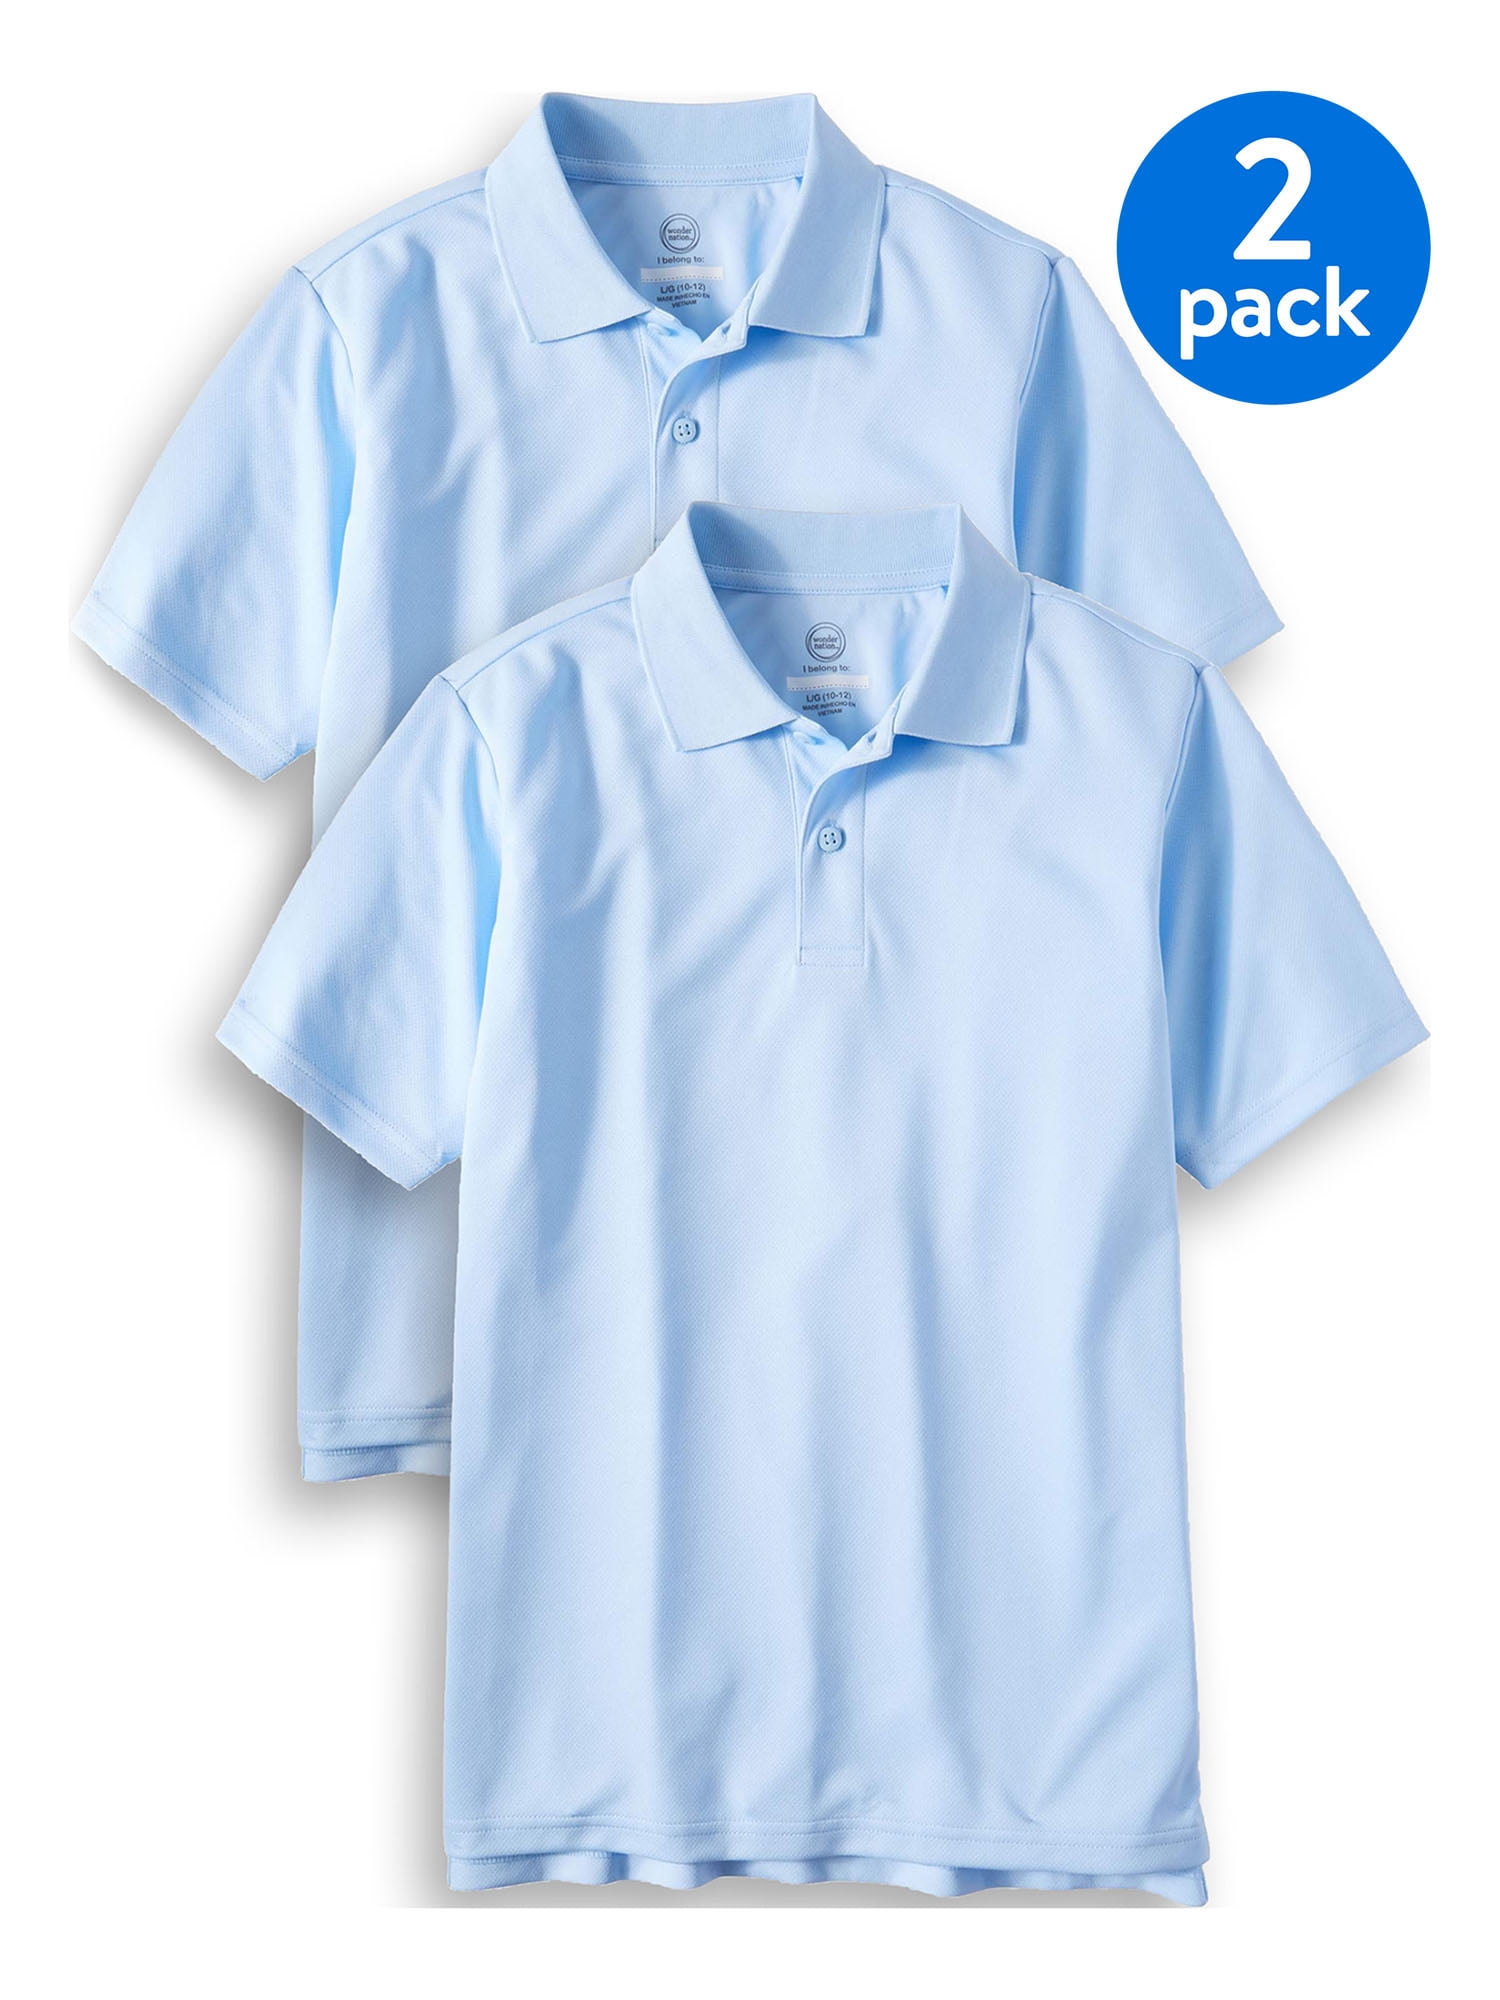 Boys Wonder Nation School Uniform Blue Short Sleeve Pique Polo 14-16 2 pk